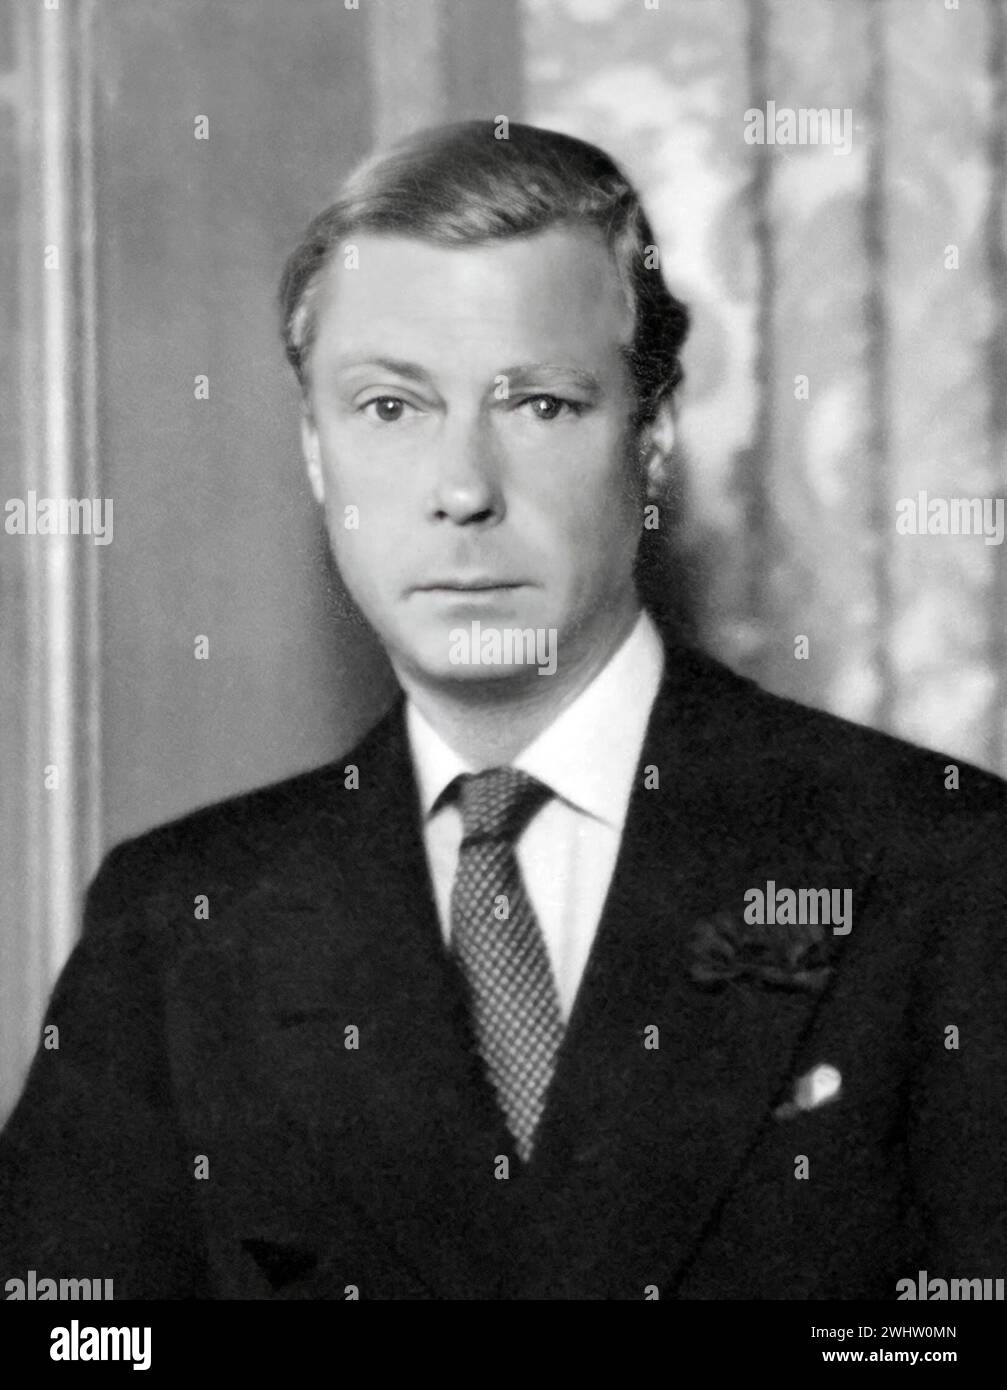 Duca di Windsor. Ritratto di re Edoardo VIII, duca di Windsor (1894-1972), ca. 1934 Foto Stock